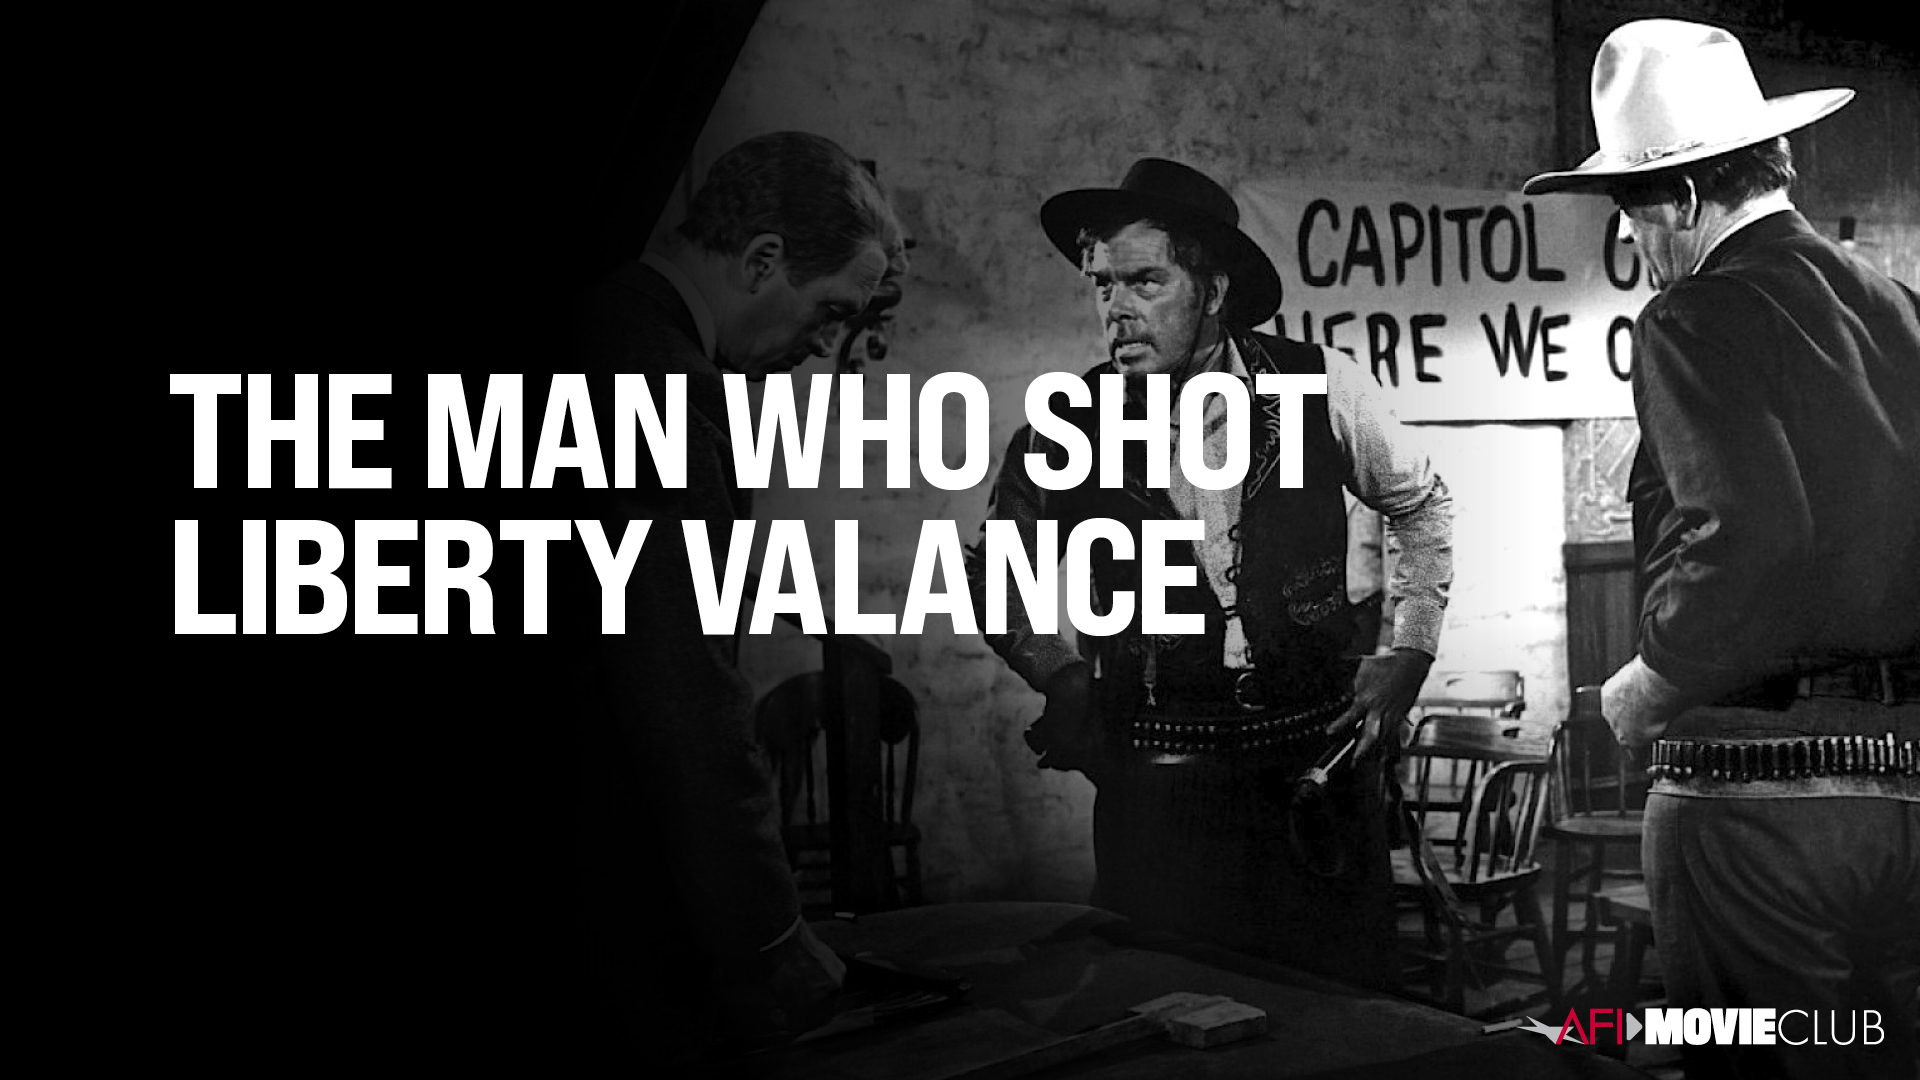 The Man Who Shot Liberty Valance Film Still - James Stewart, John Wayne, Strother Martin, Lee Marvin, and Lee Van Cleef